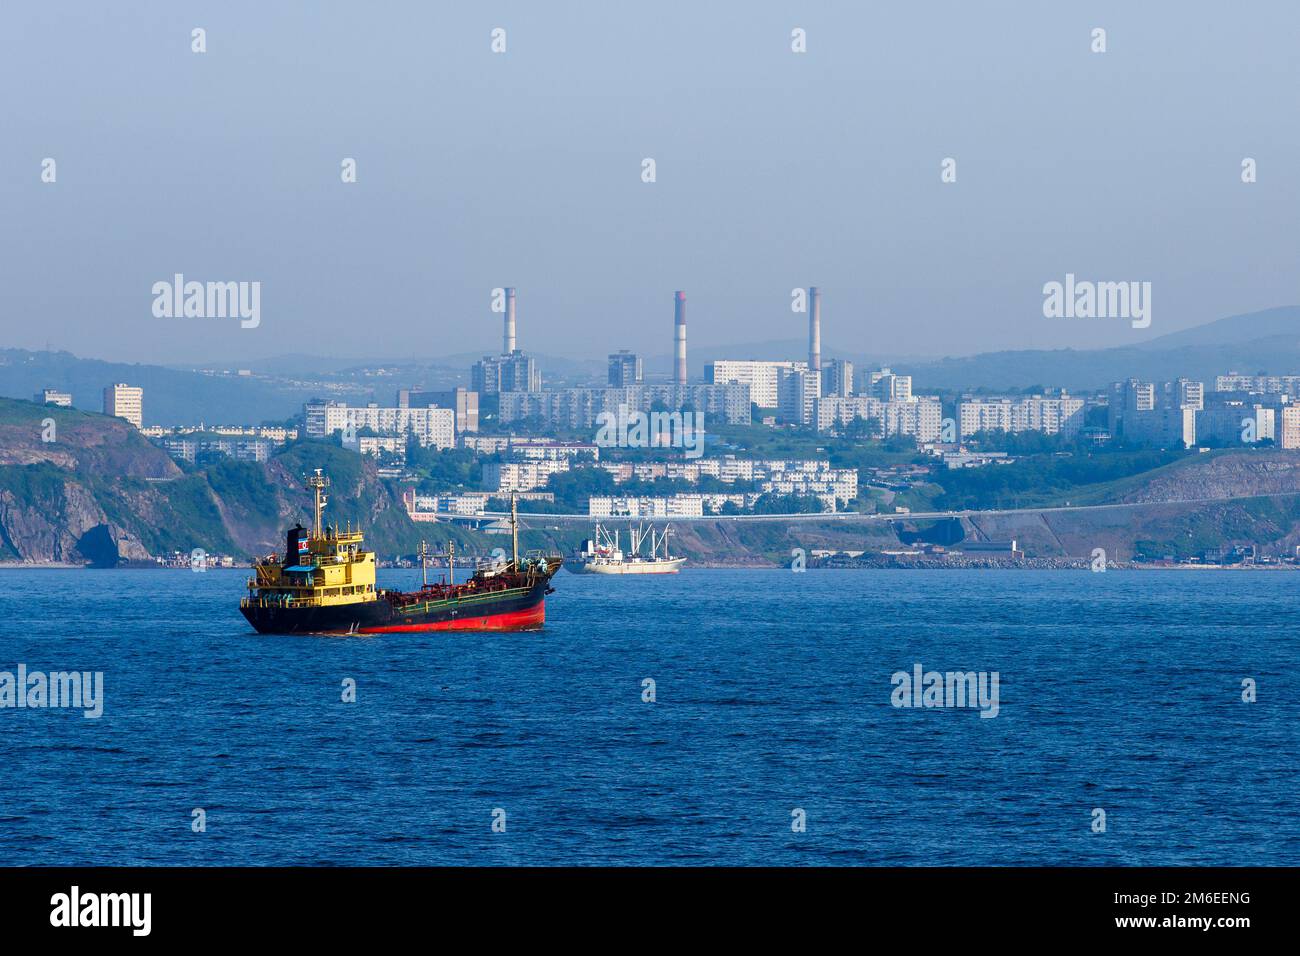 Summer, 2016 - Vladivostok, Russia - A merchant ship stands on the roadstead in the Golden Horn Bay in Vladivostok Stock Photo